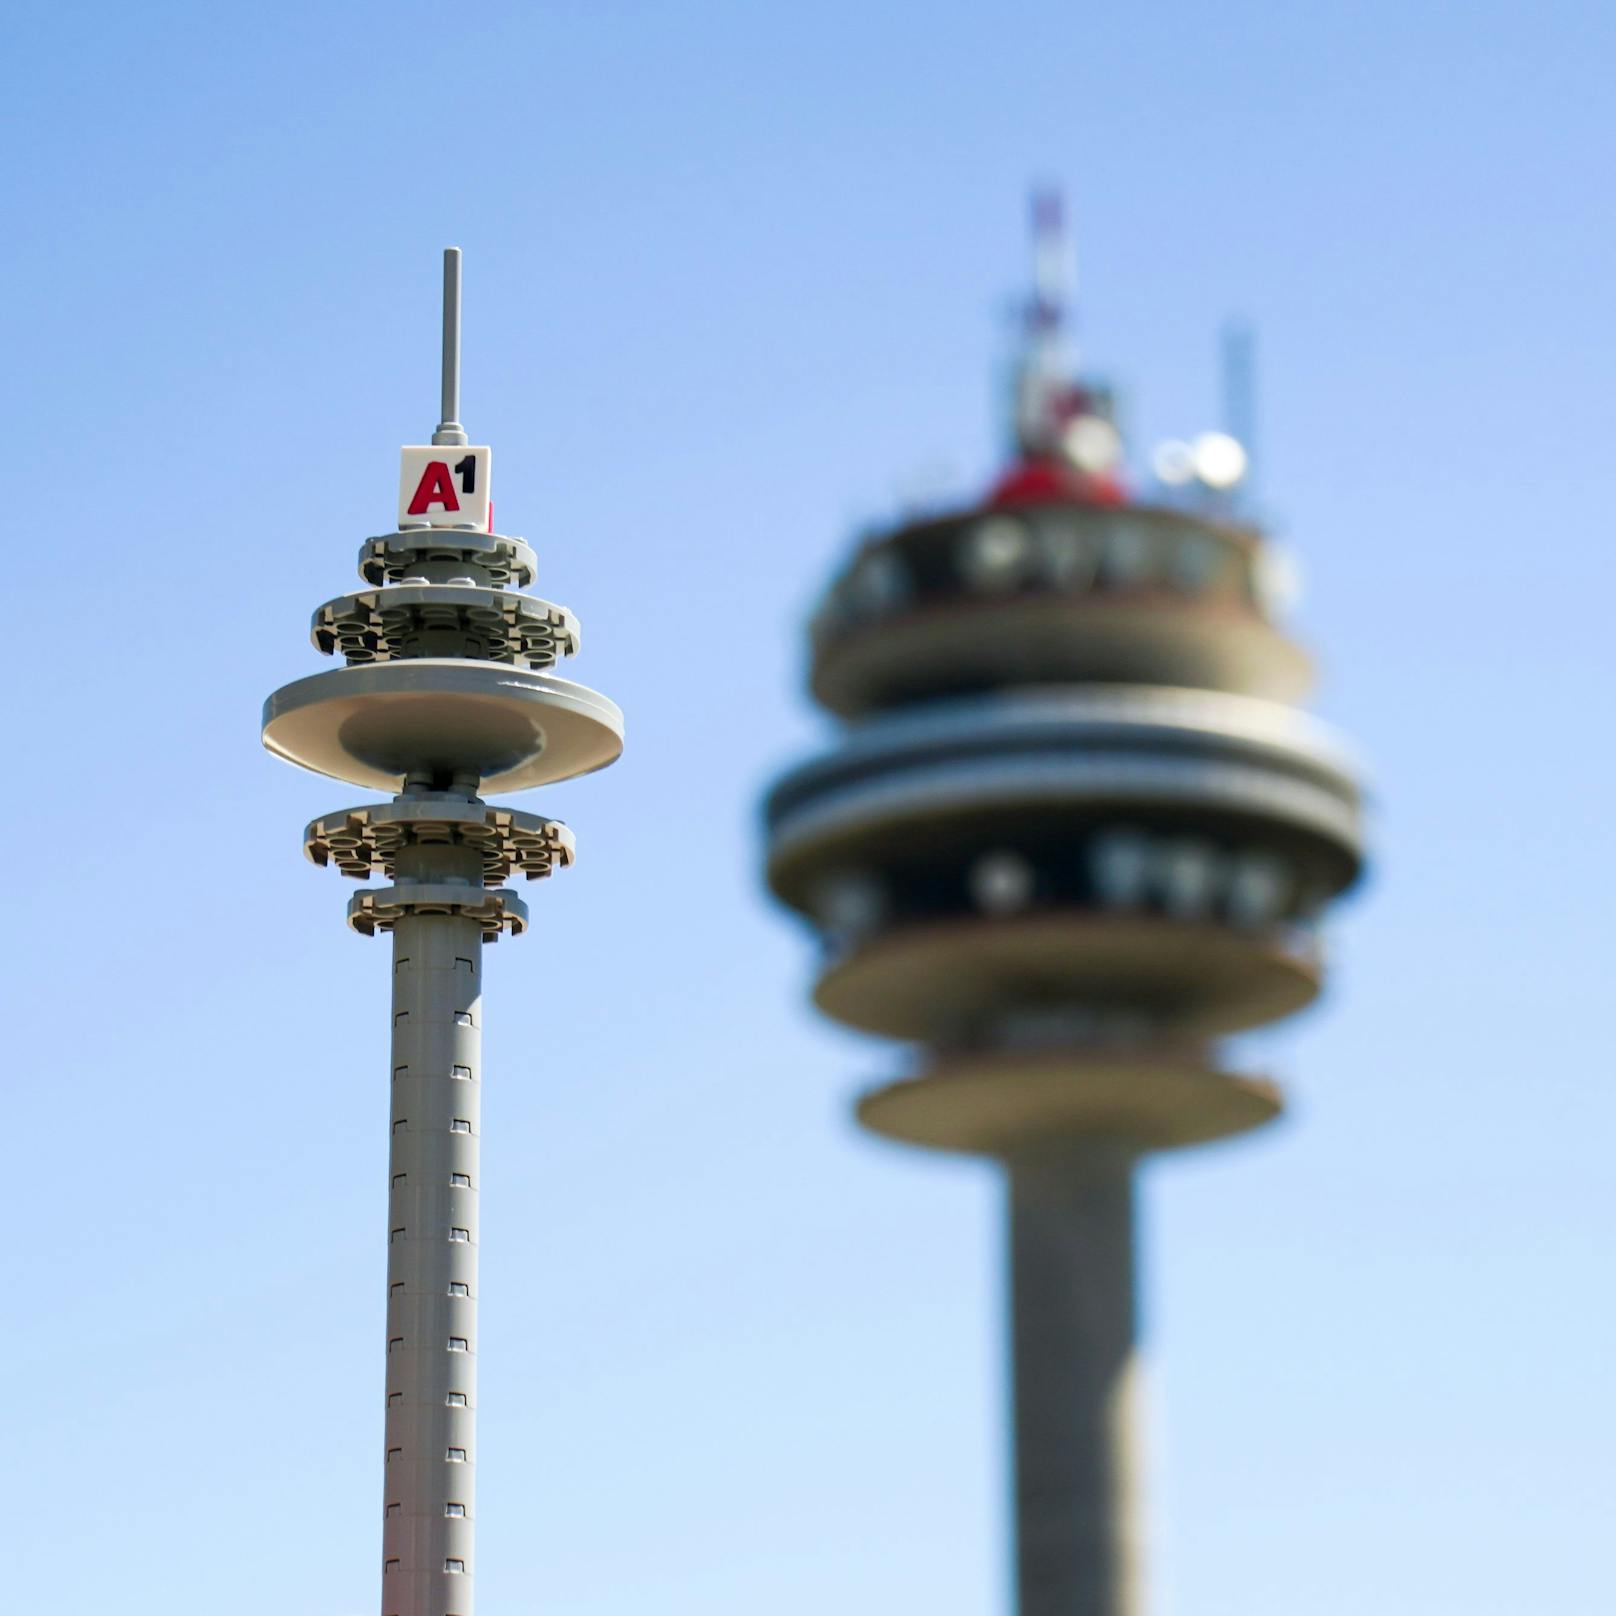 Arsenalturm - Funkturm der A1 Telekom